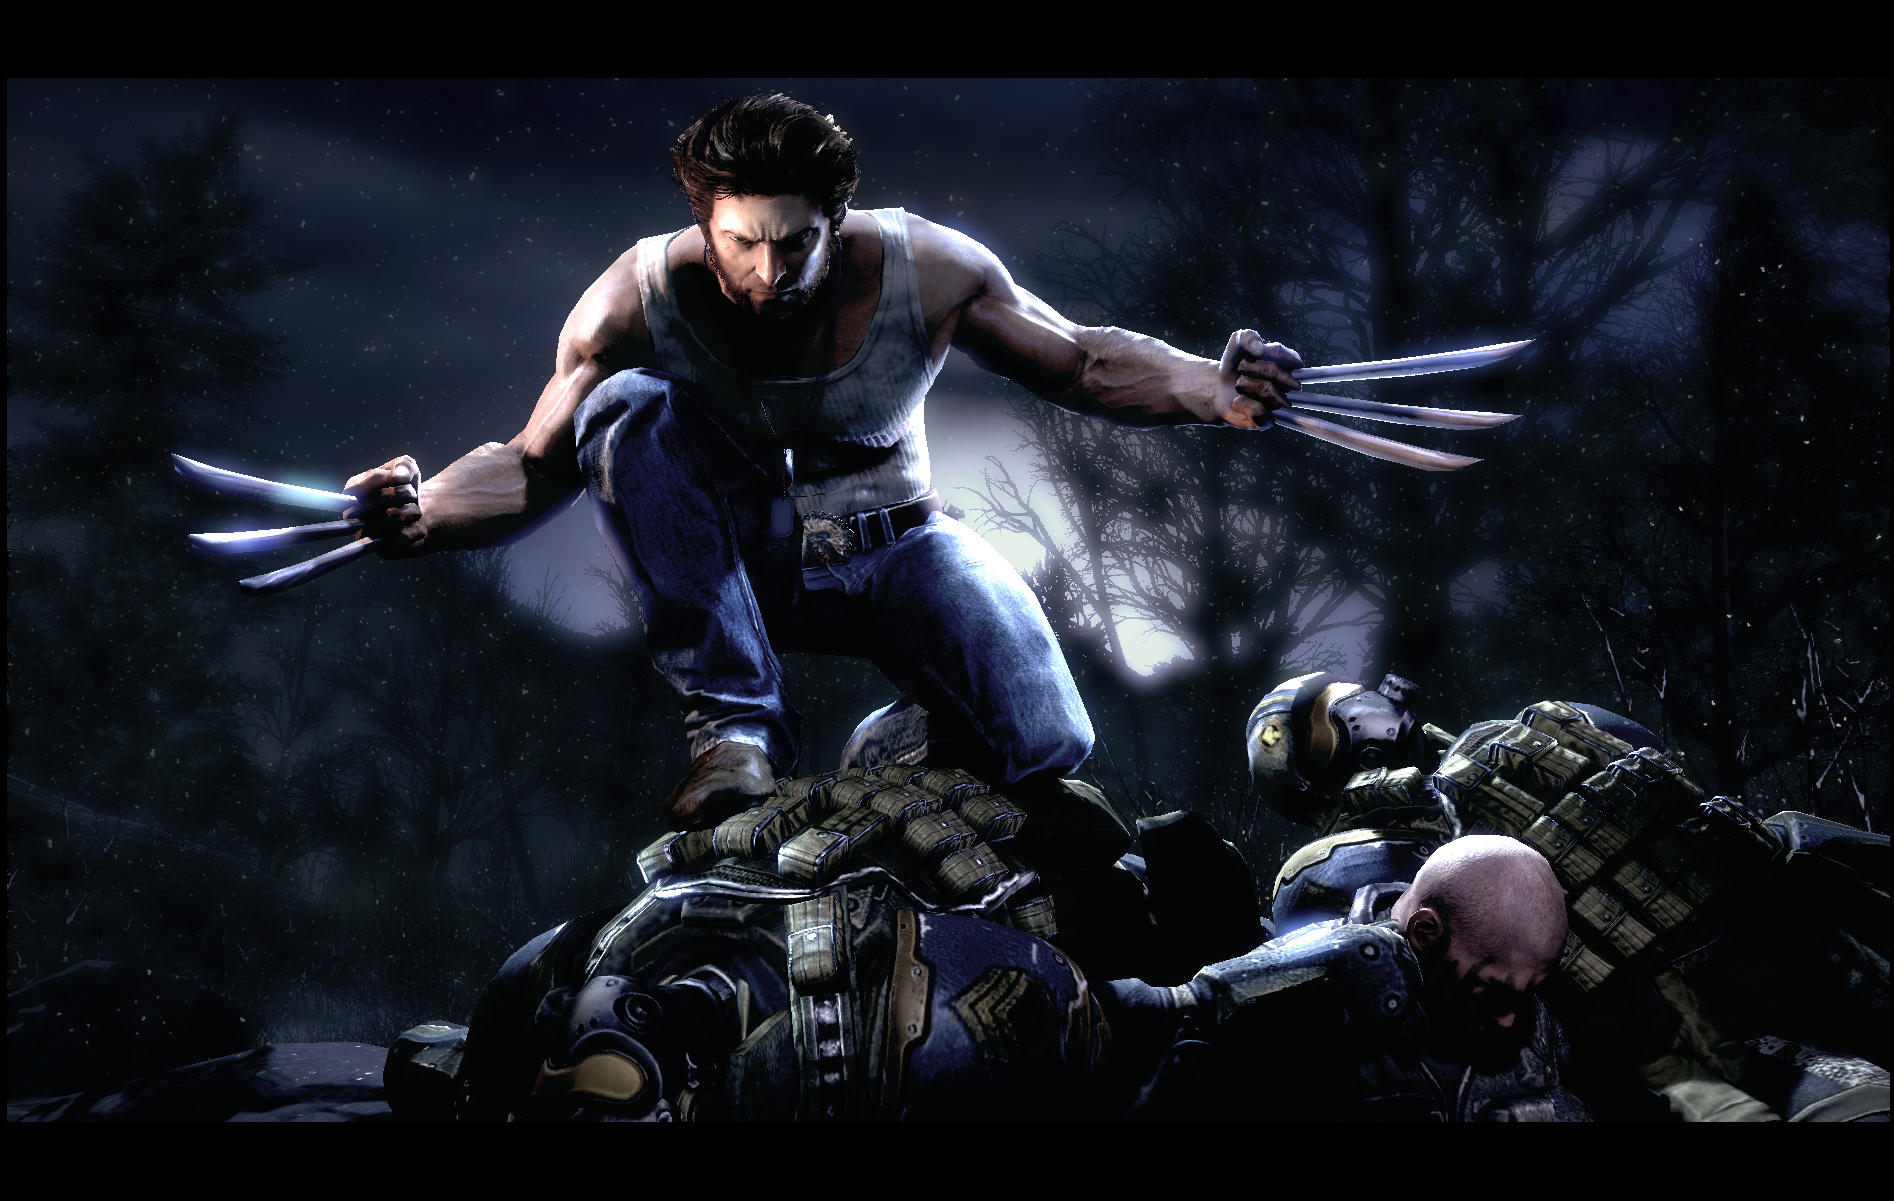 5 man игры. X-men Origins: Wolverine 2009. X-men Origins: Wolverine (игра). X men Origins Wolverine 2009 игра. X men Wolverine game.